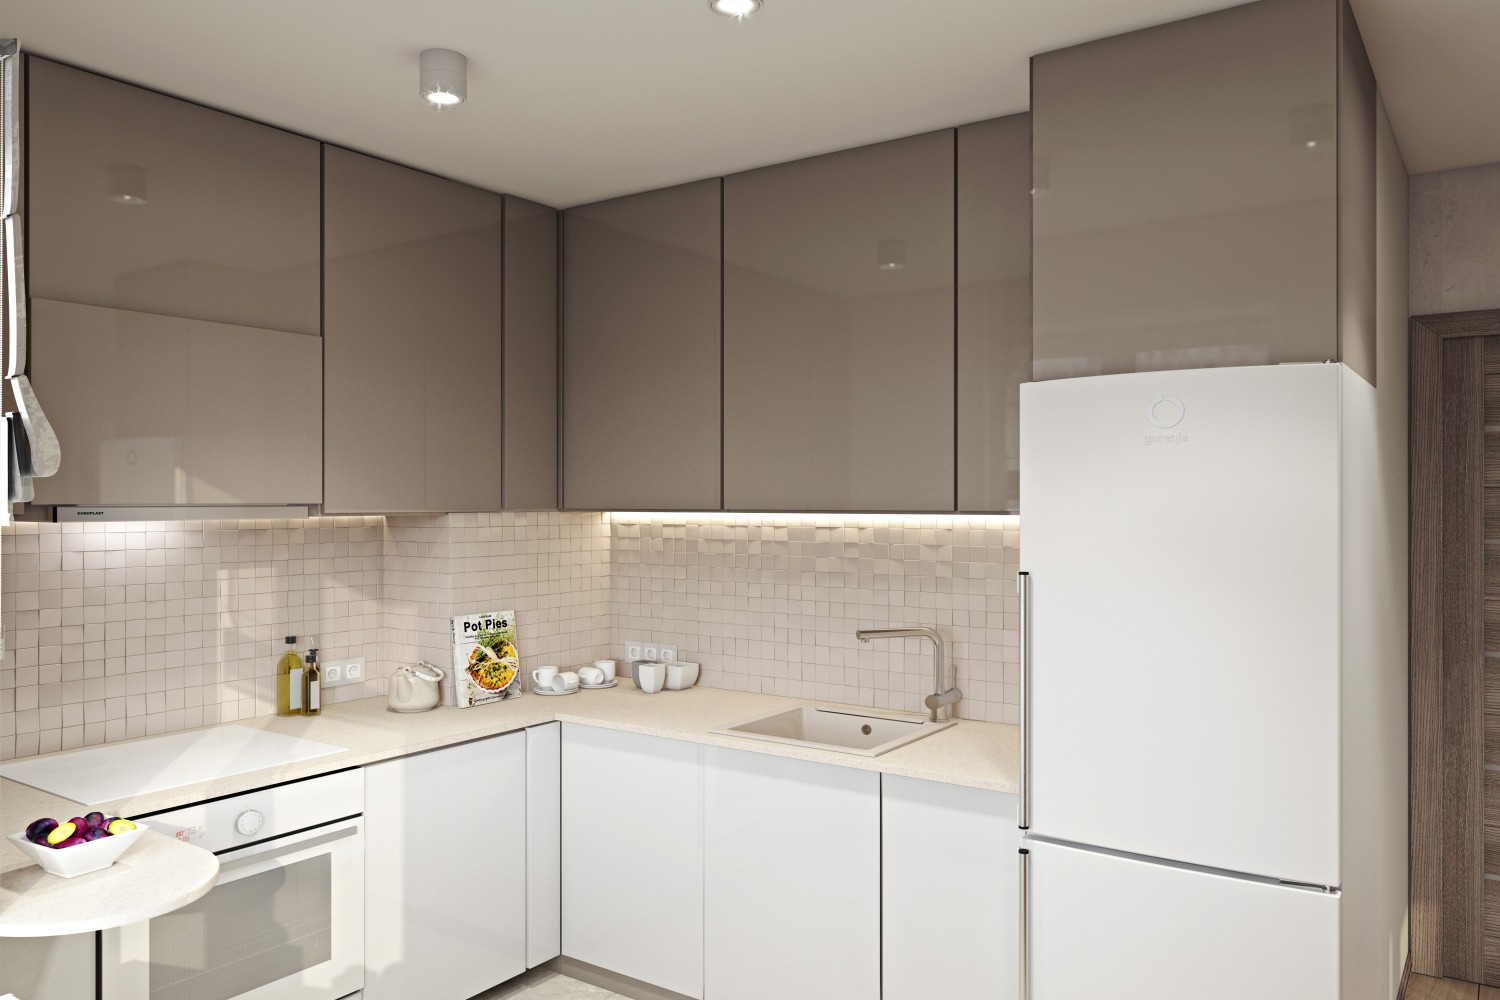 Кухня — Дизайн-проект 2-комнатной квартиры, 44 м.кв — студия дизайна  Interior12 